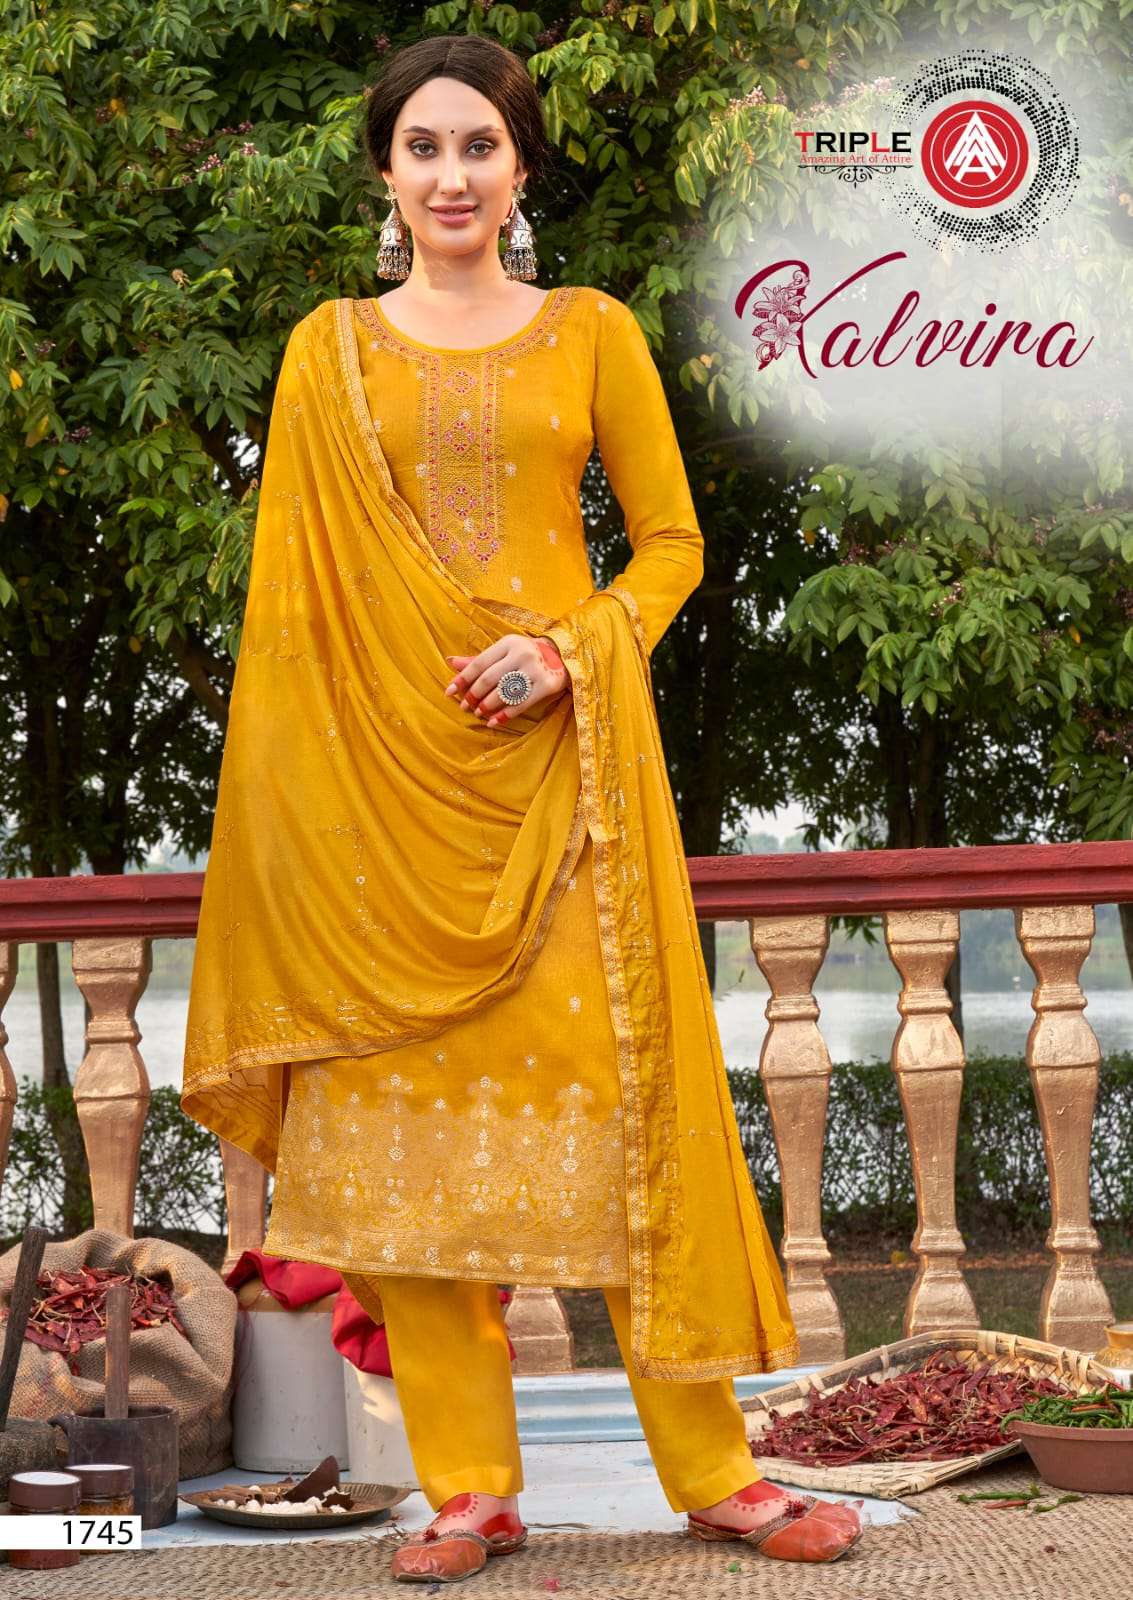 triple aaa kalvira 1741-1746 series fancy designer salwar suits manufacturer surat 